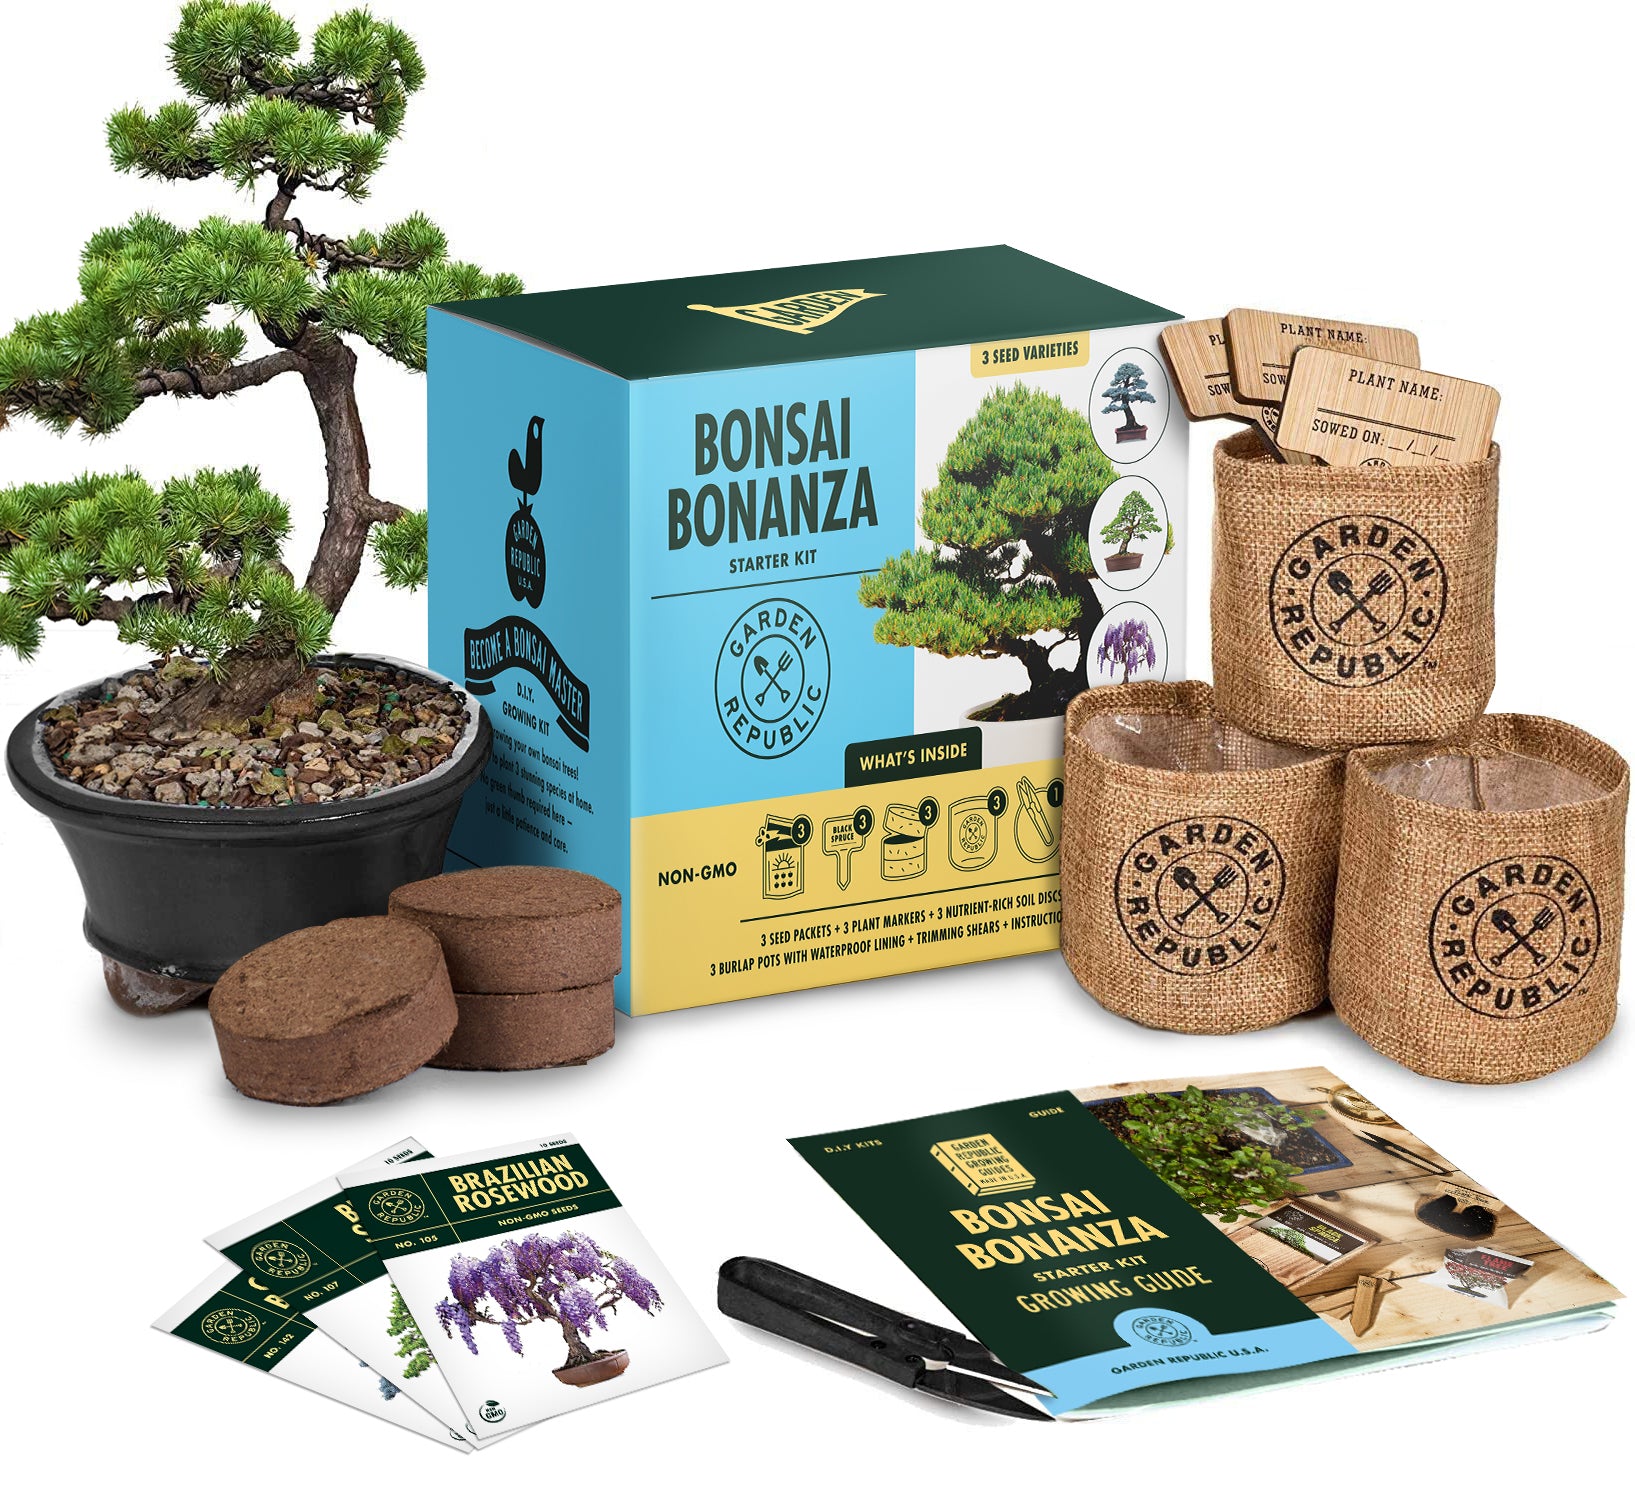 Buy wholesale Bonsai kit - To grow